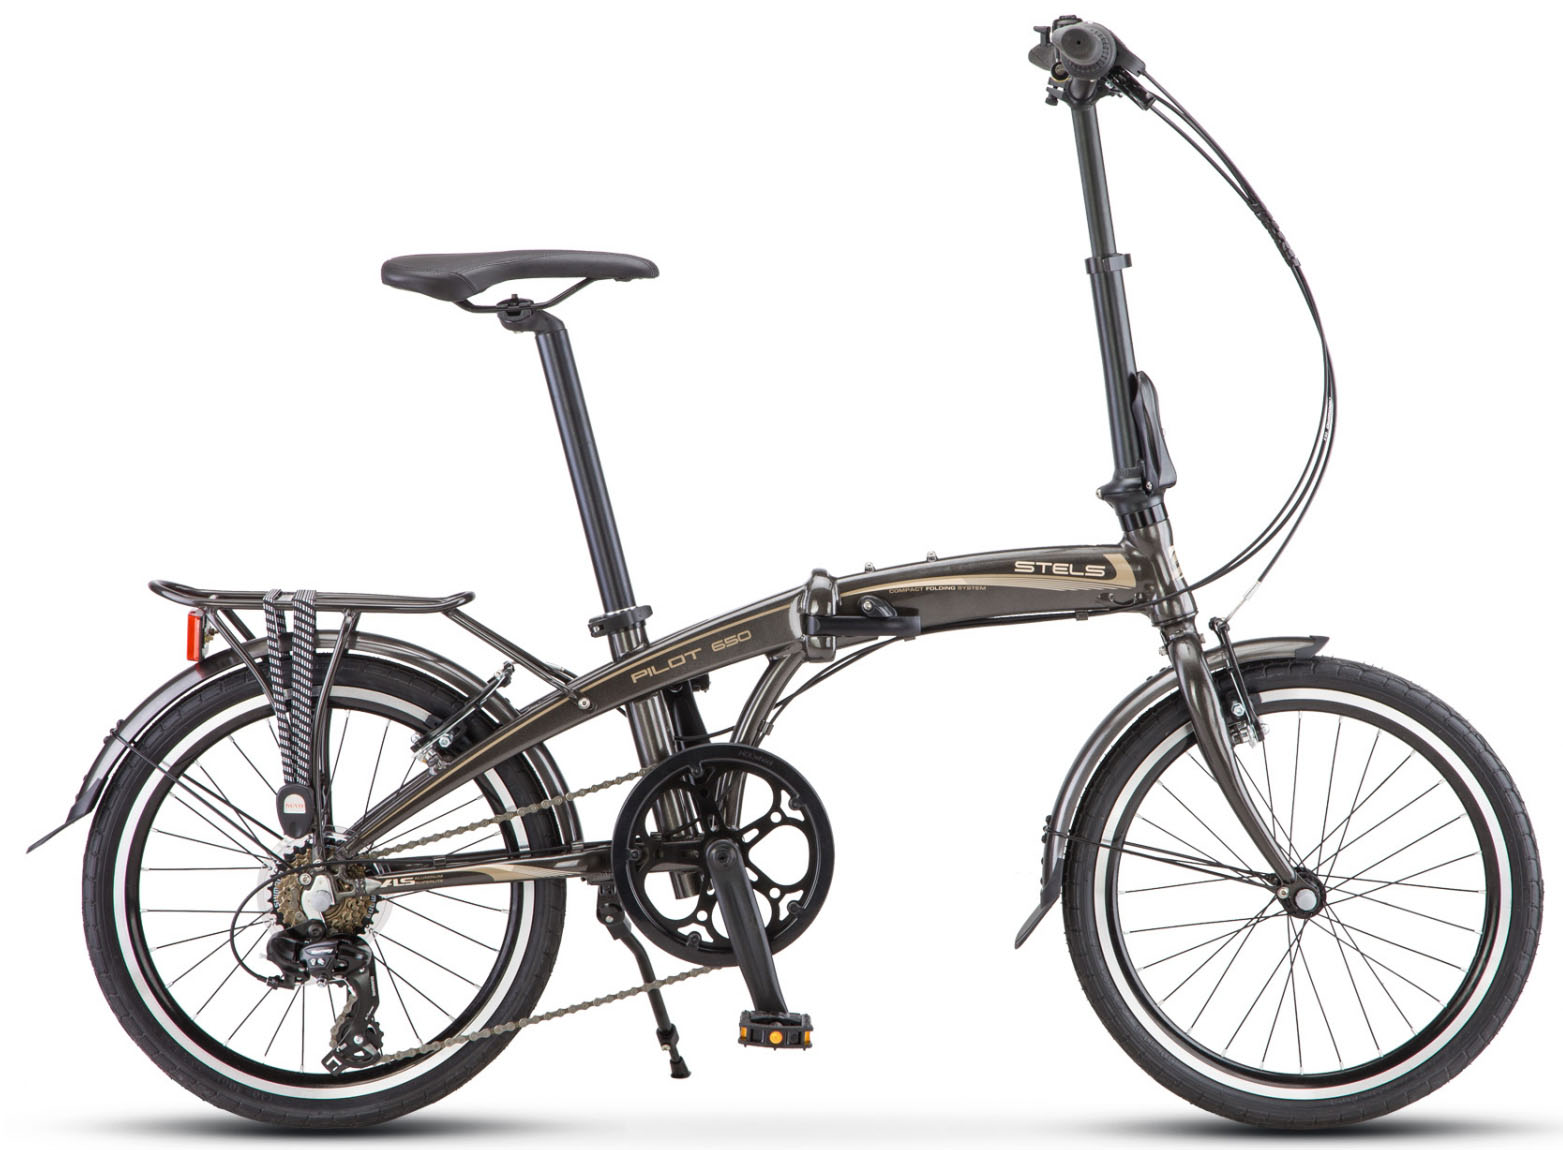  Велосипед Stels Pilot 650 20 V010 2019